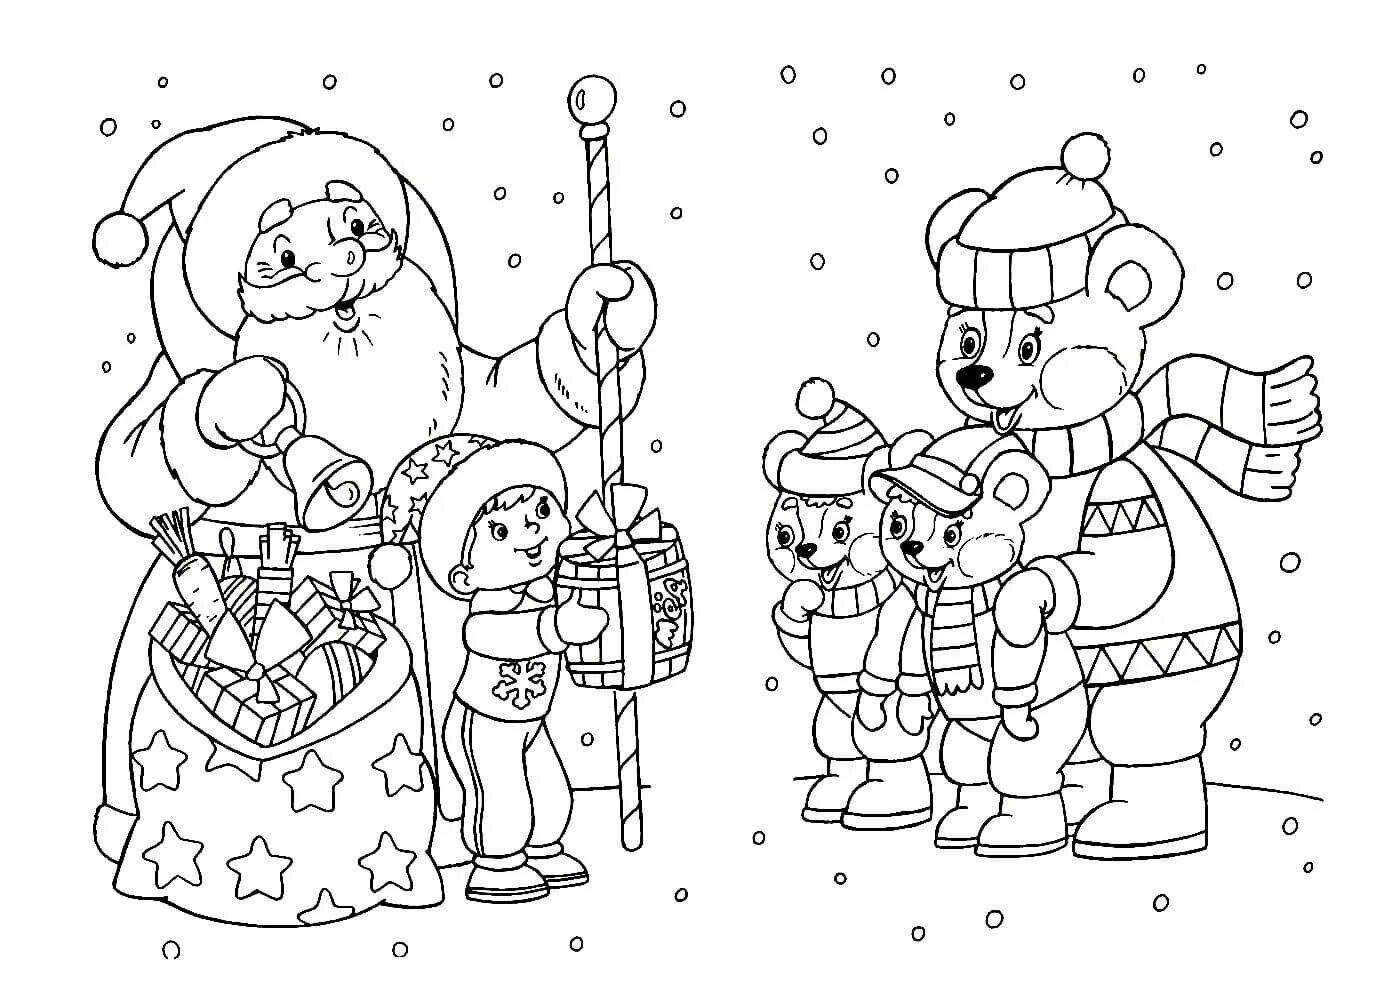 Children's Christmas drawing #3